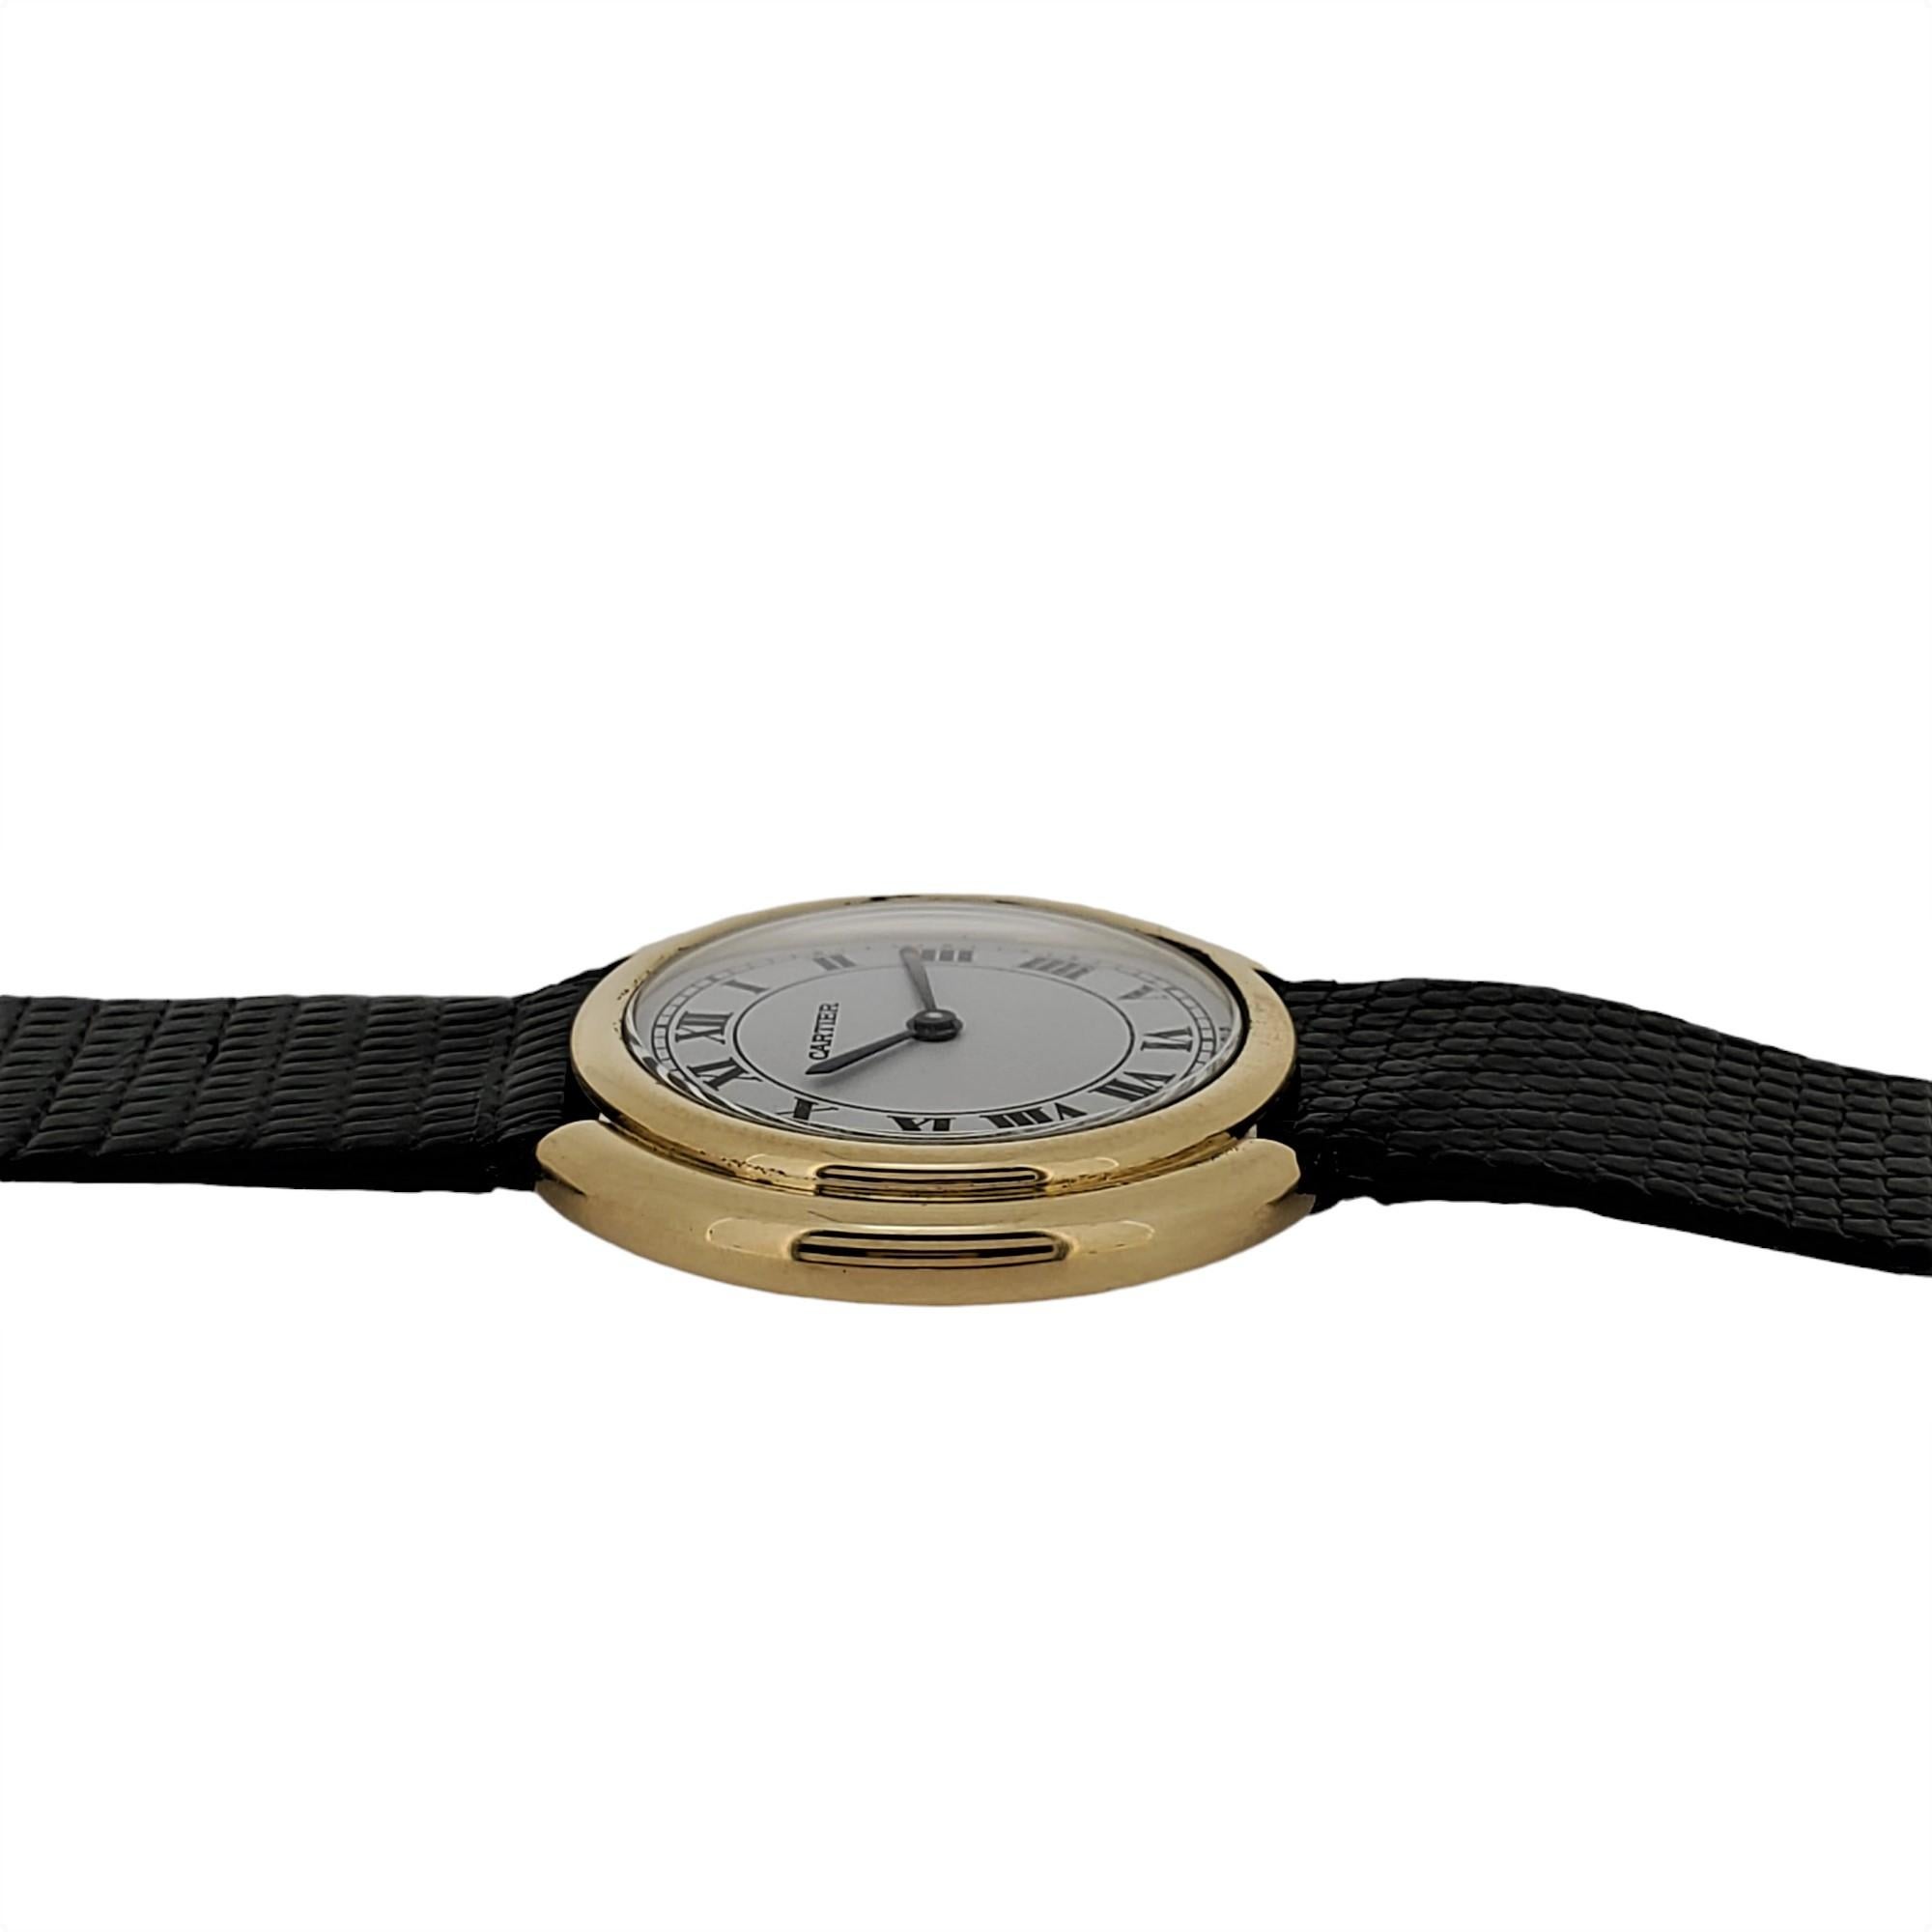 Cartier Paris Vendome Large Automatic Watch with Deployant Buckle, circa 1975 For Sale 2